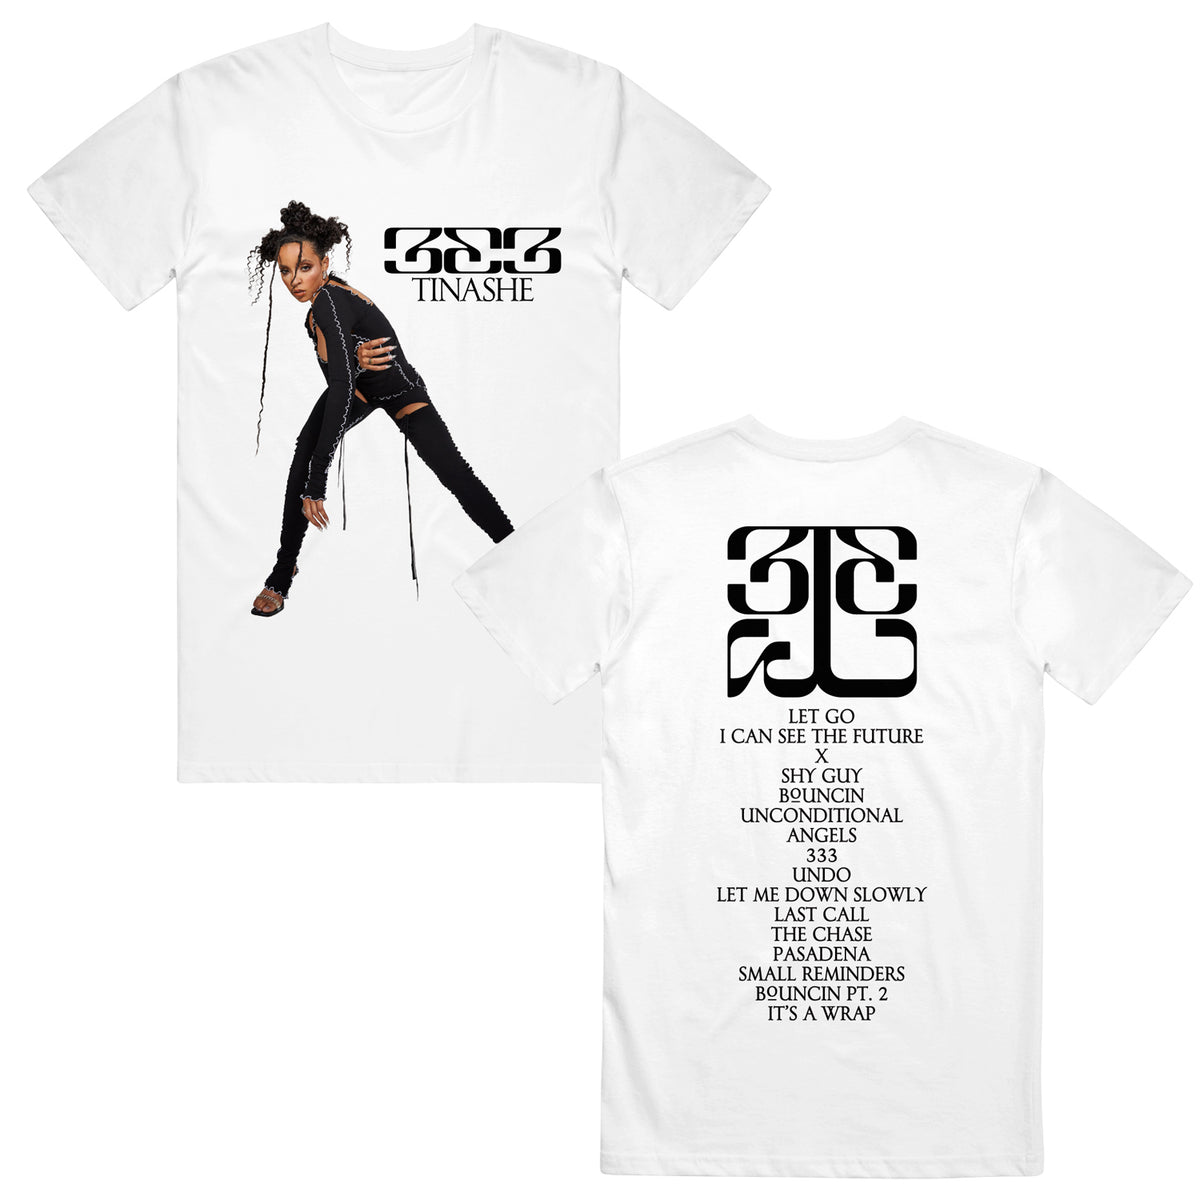 T-shirt TU SUZE – Trans Shirt